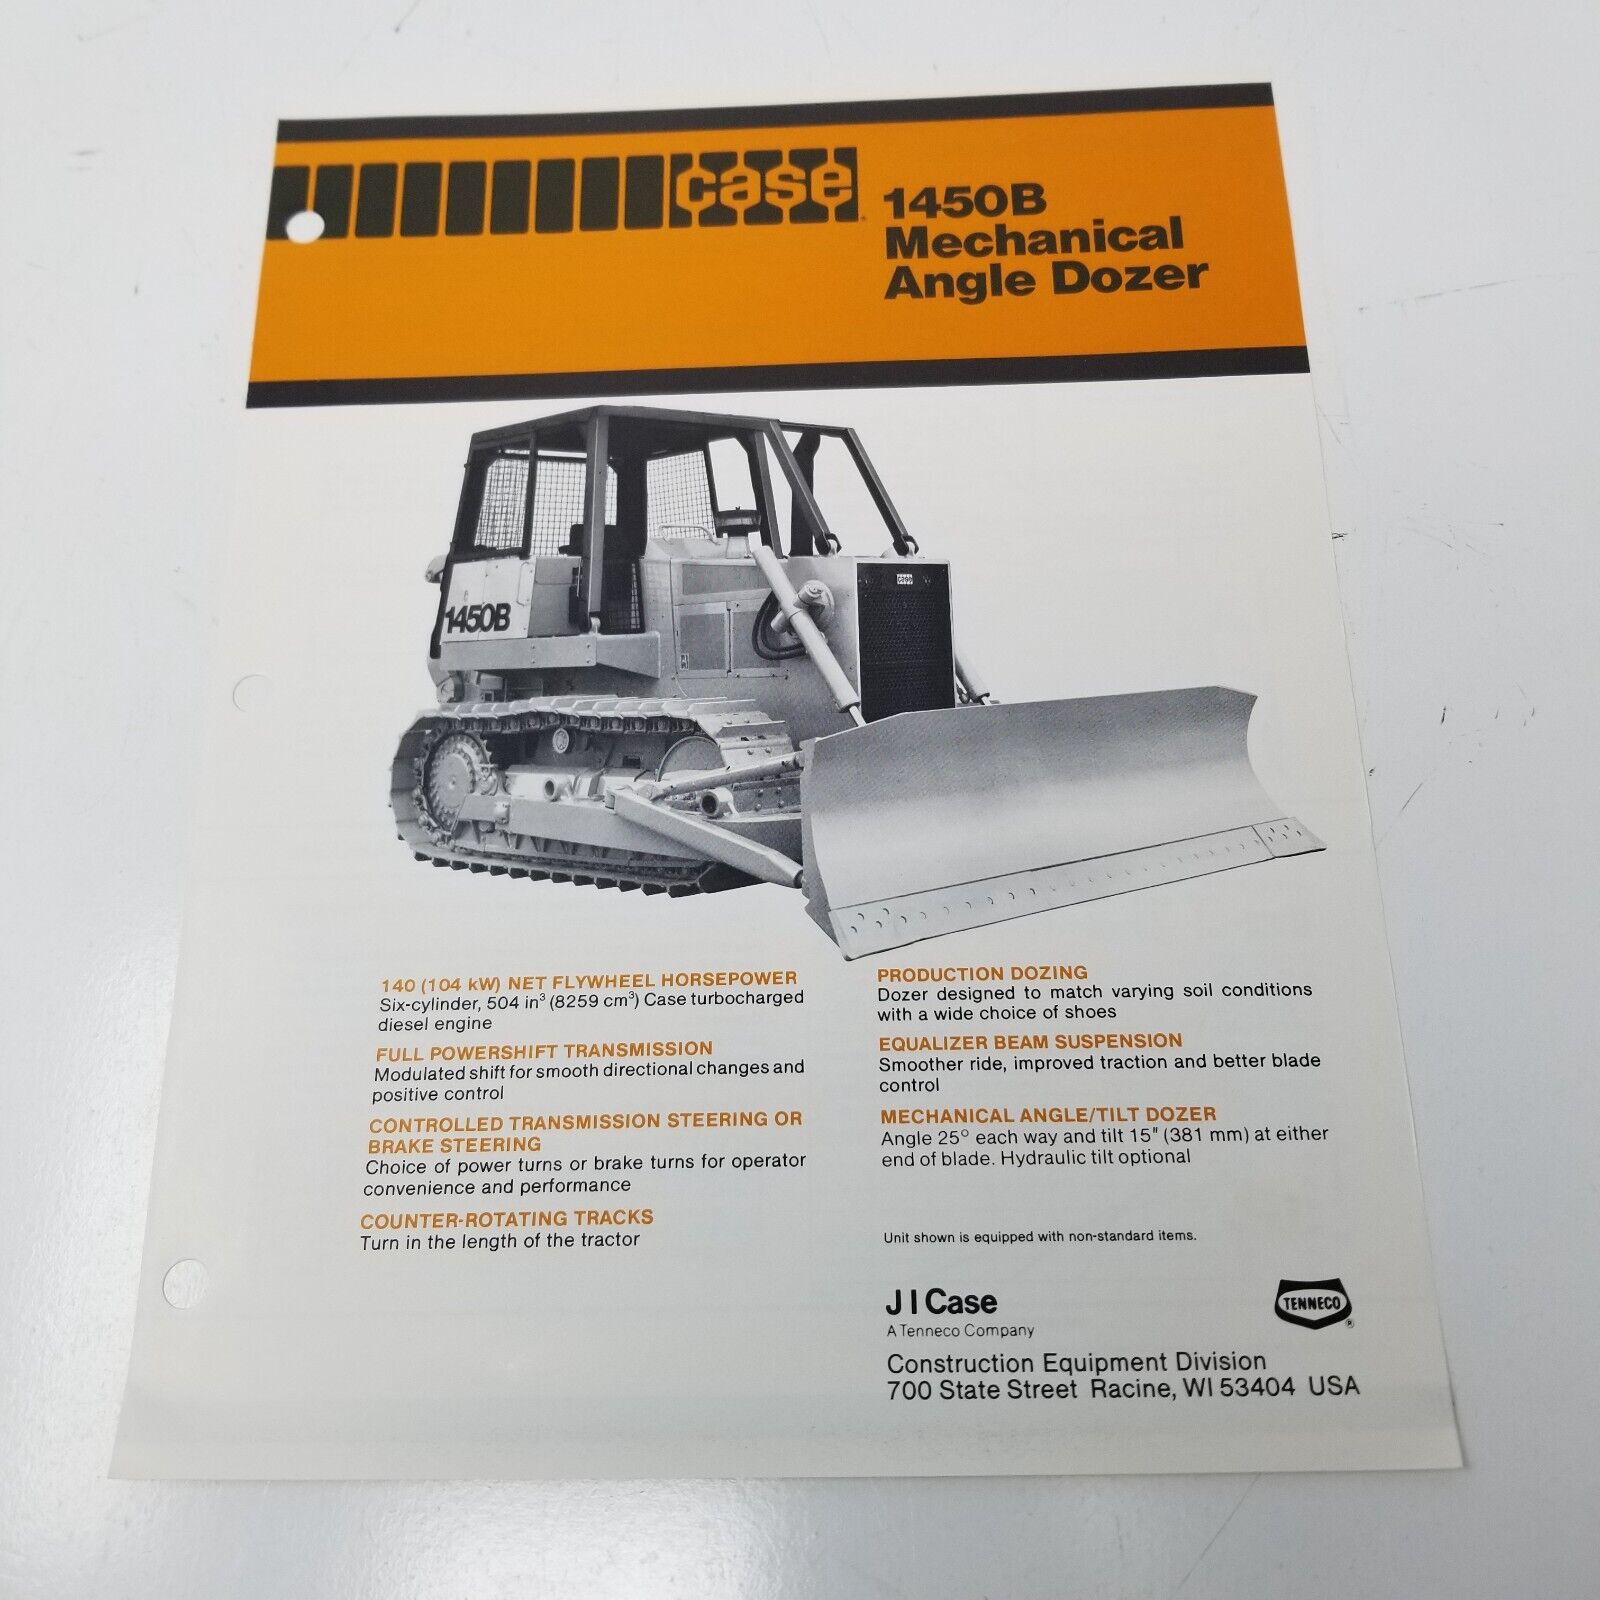 Case 1450B Mechanical Angle Dozer Sales Brochure 1980 Specifications Photos